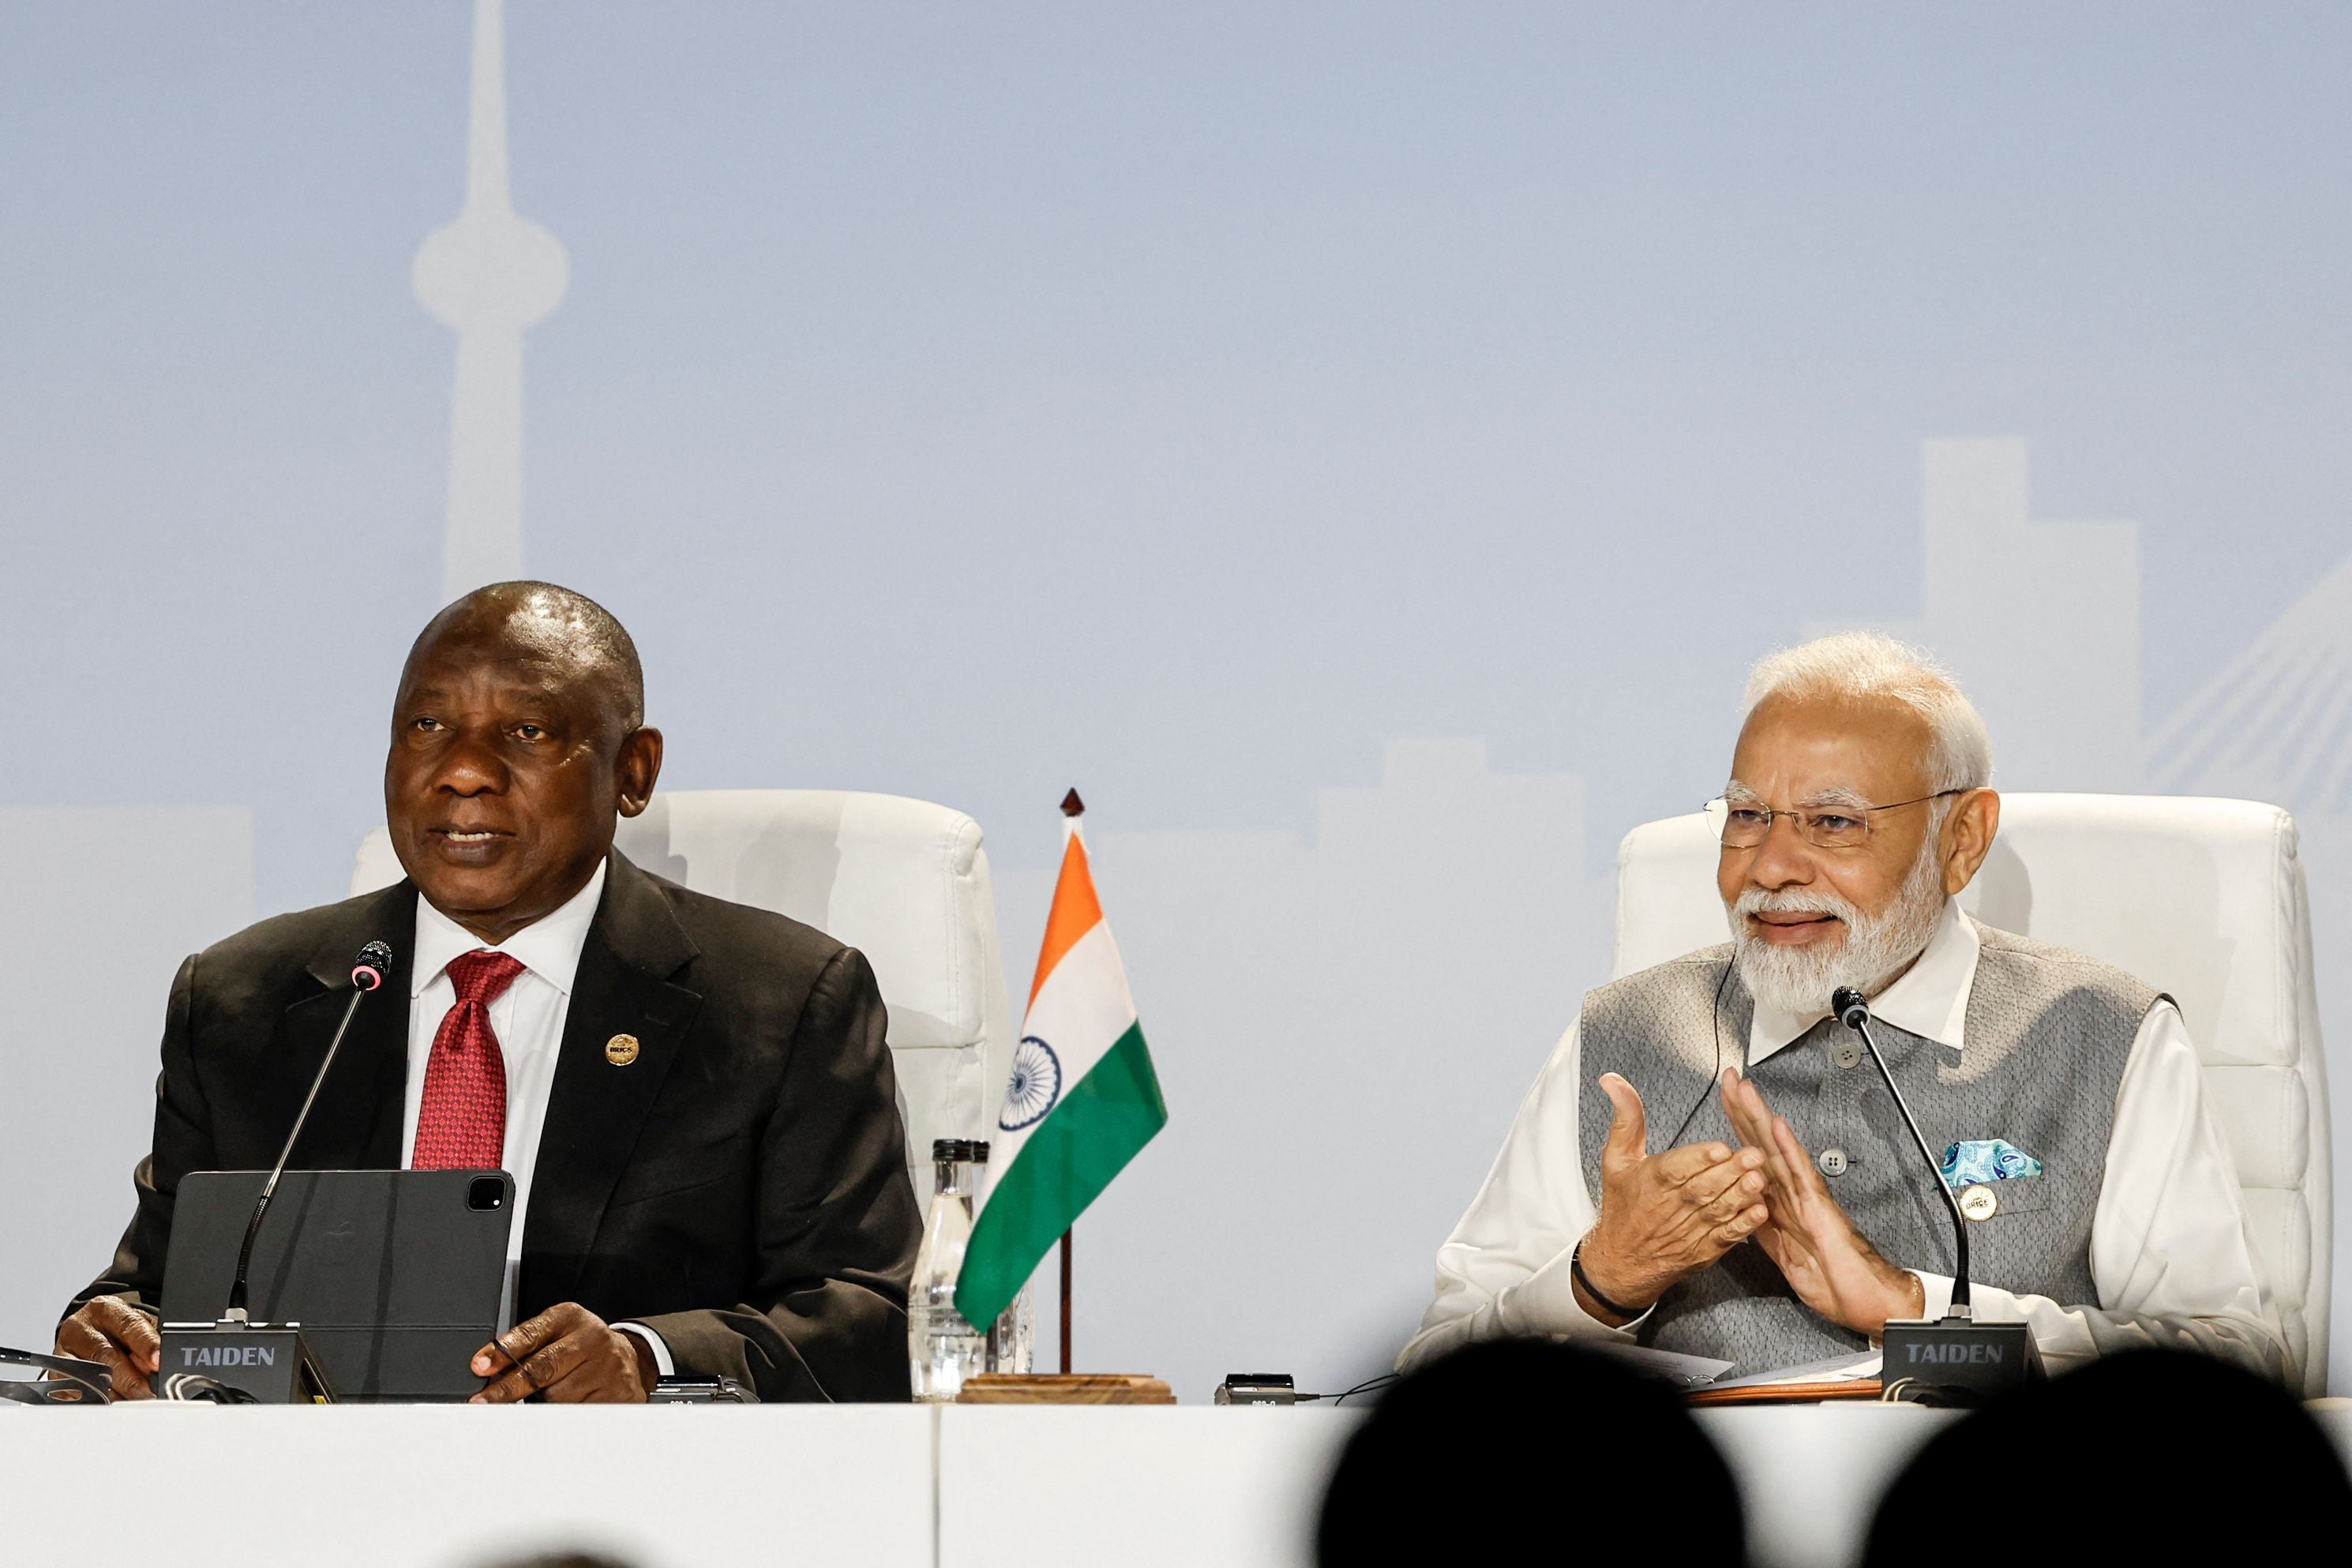 BRICS Summit 2023: PM Modi to travel to South Africa for BRICS meeting